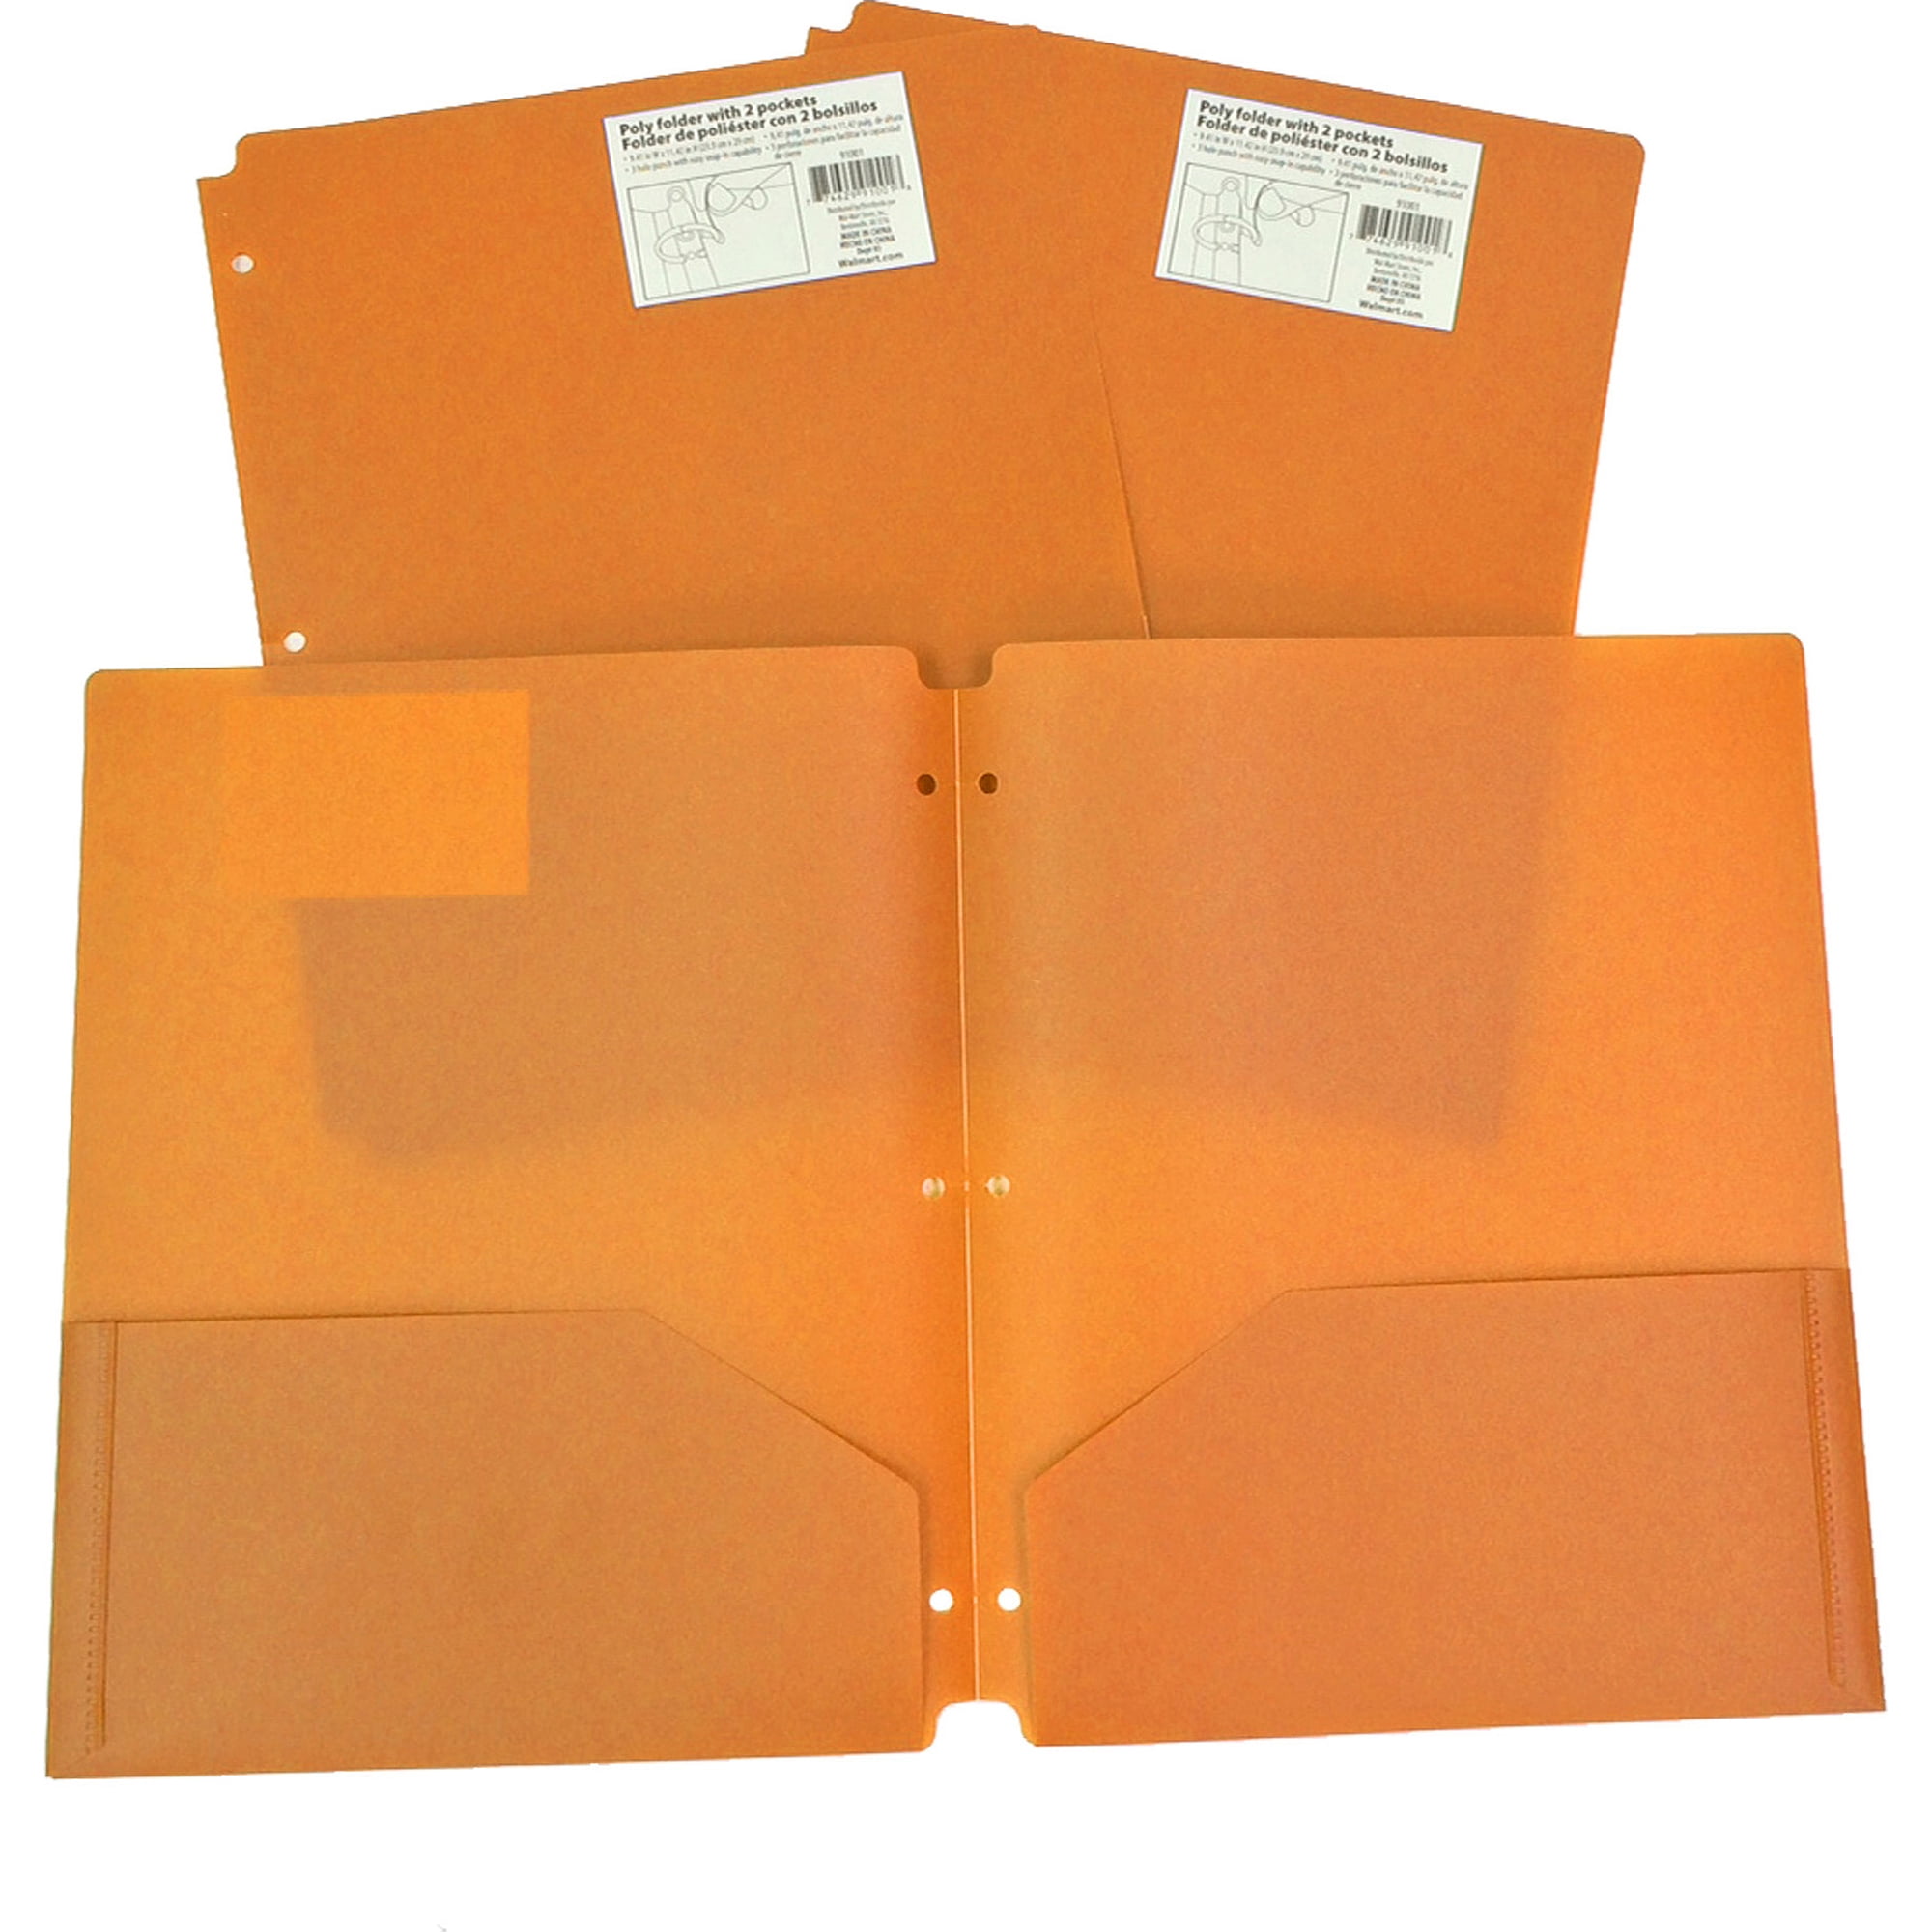 92310-PR Purple Lion 2-Pocket Plastic Folder with Fasteners 1 Folder 